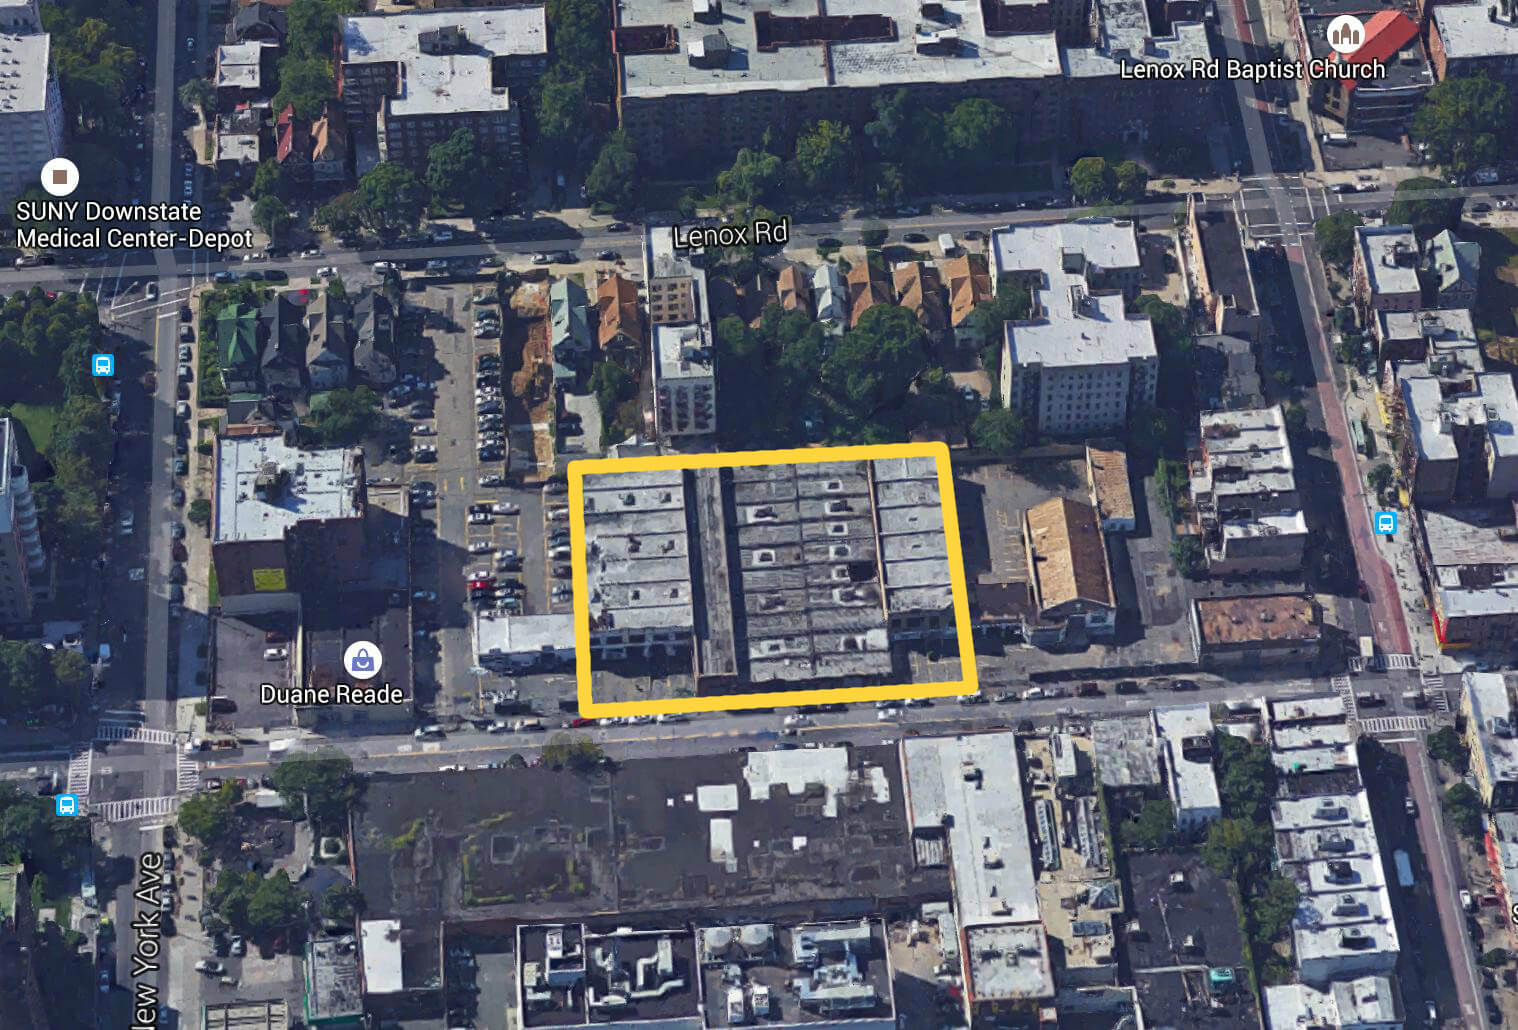 350 Clarkson Avenue, image via Google Maps